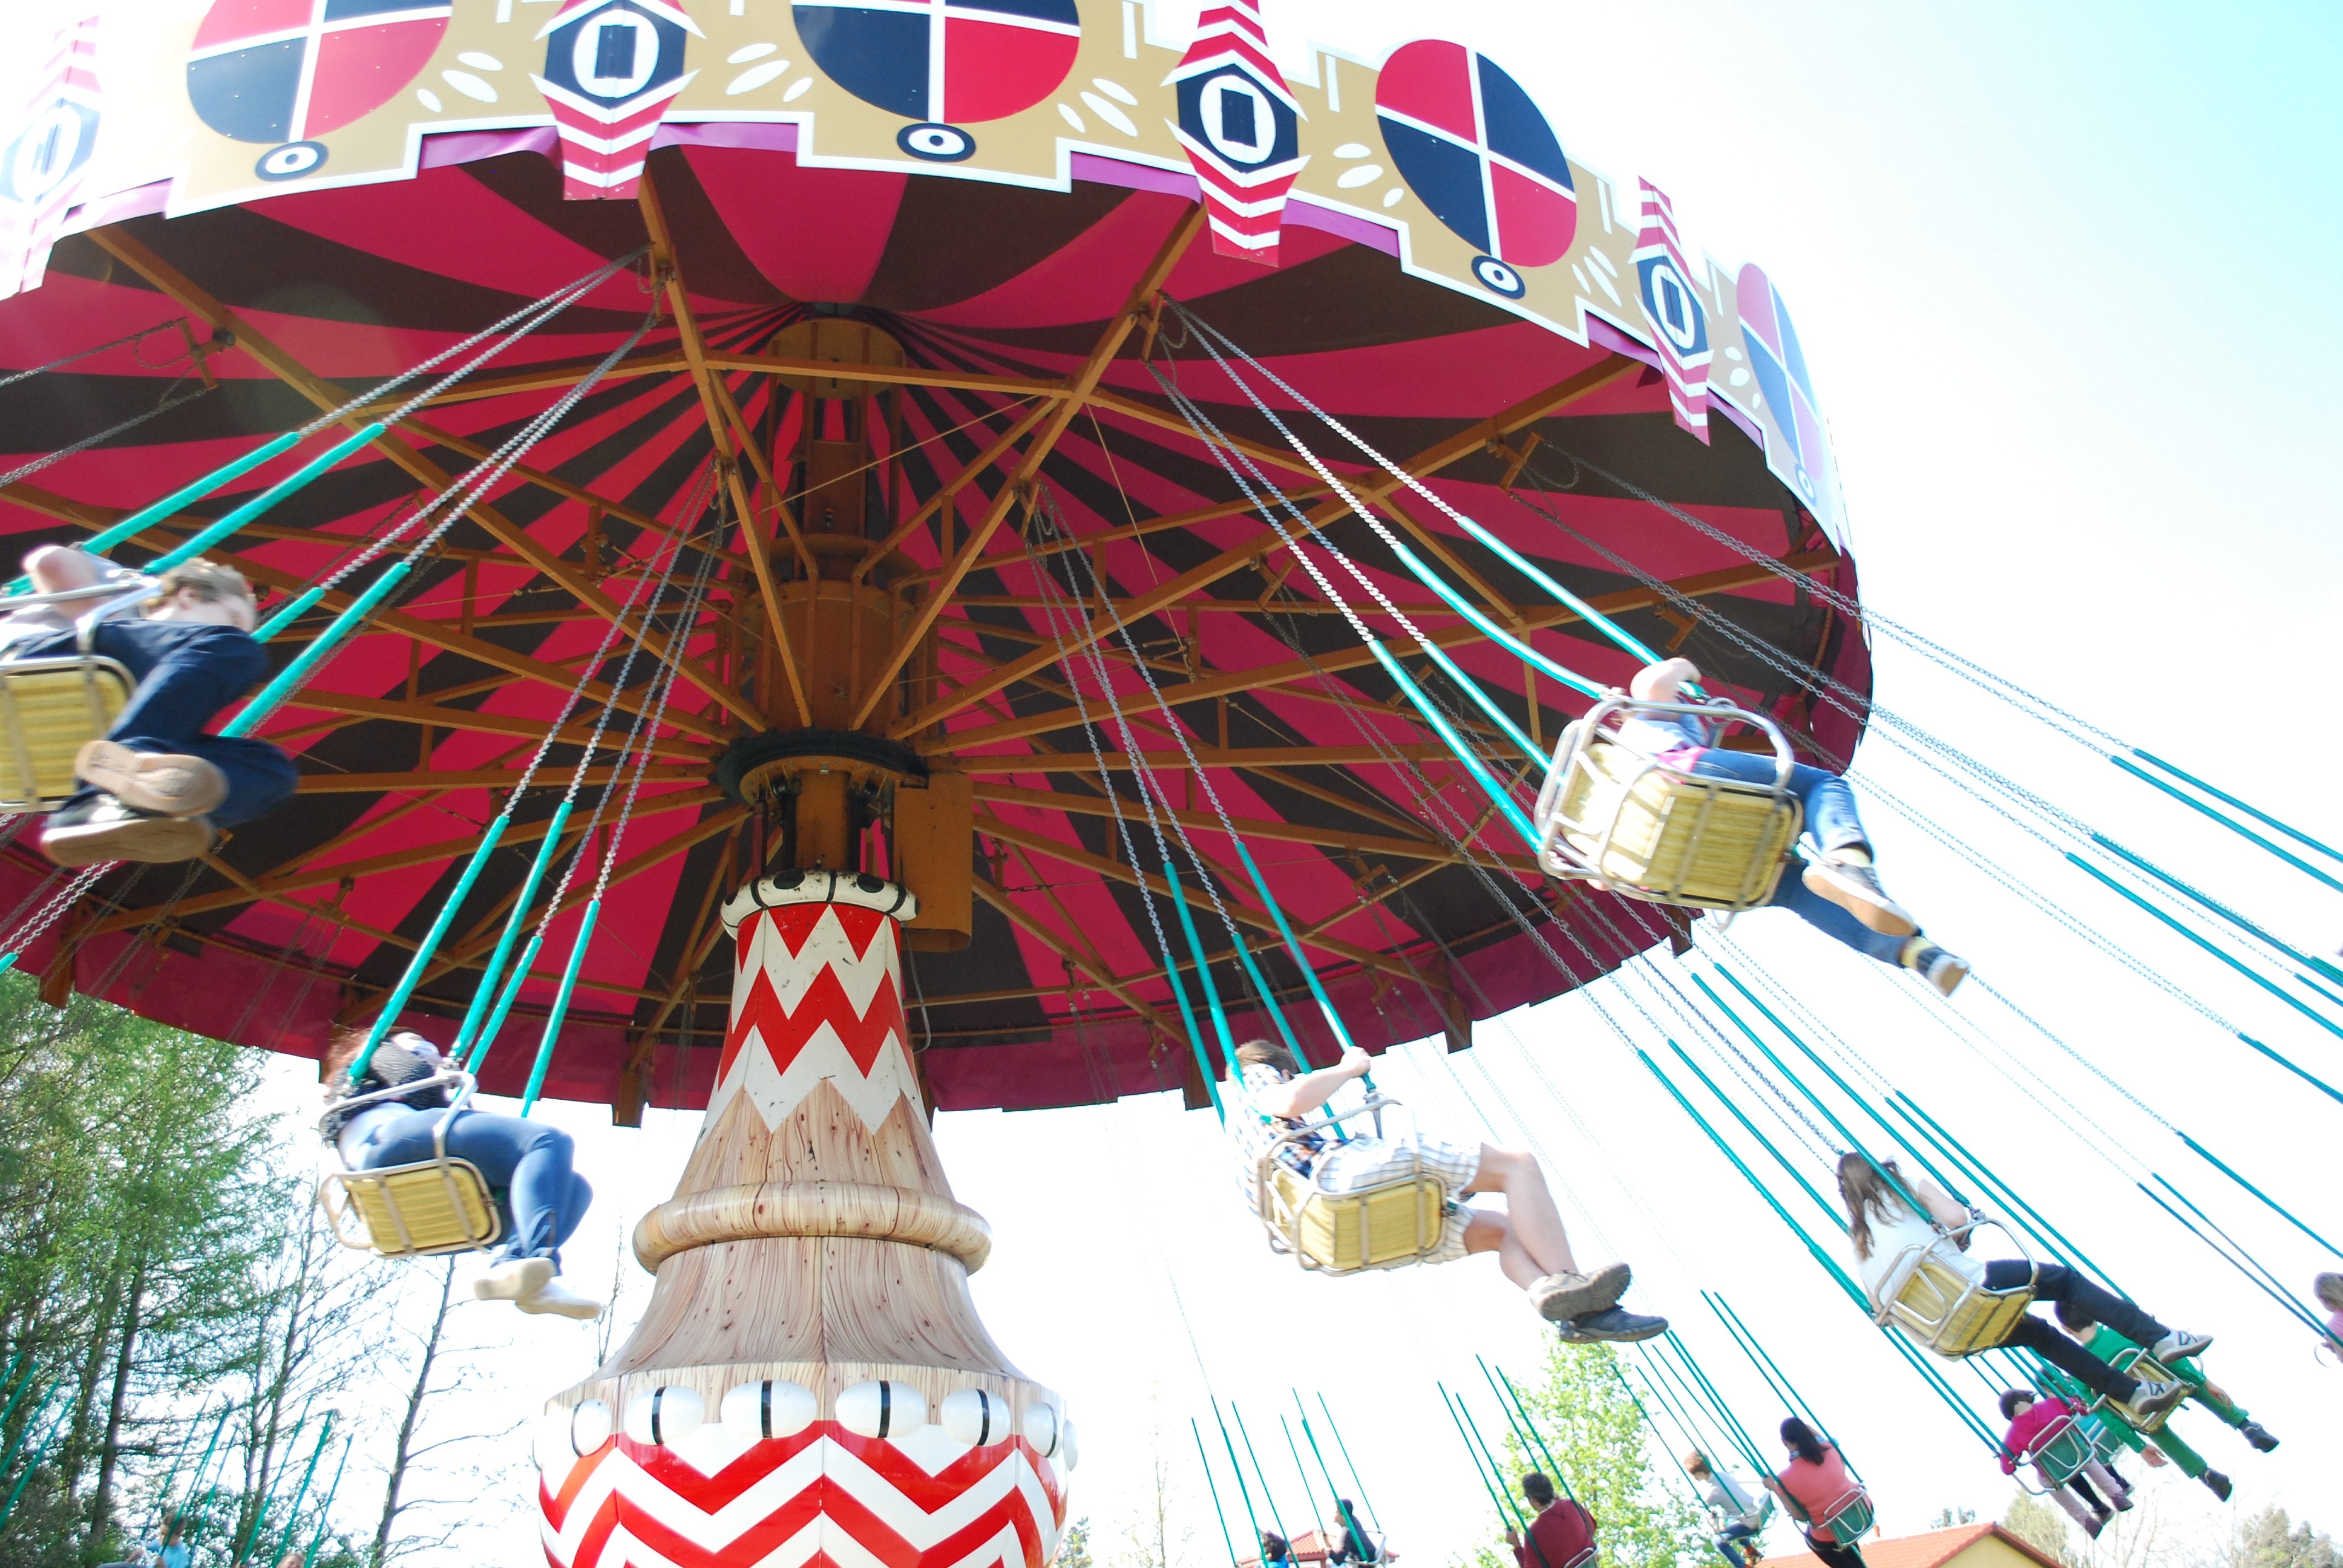 Swings, Spinning, Fun, Amusement Park, amusement park, arts culture and entertainment